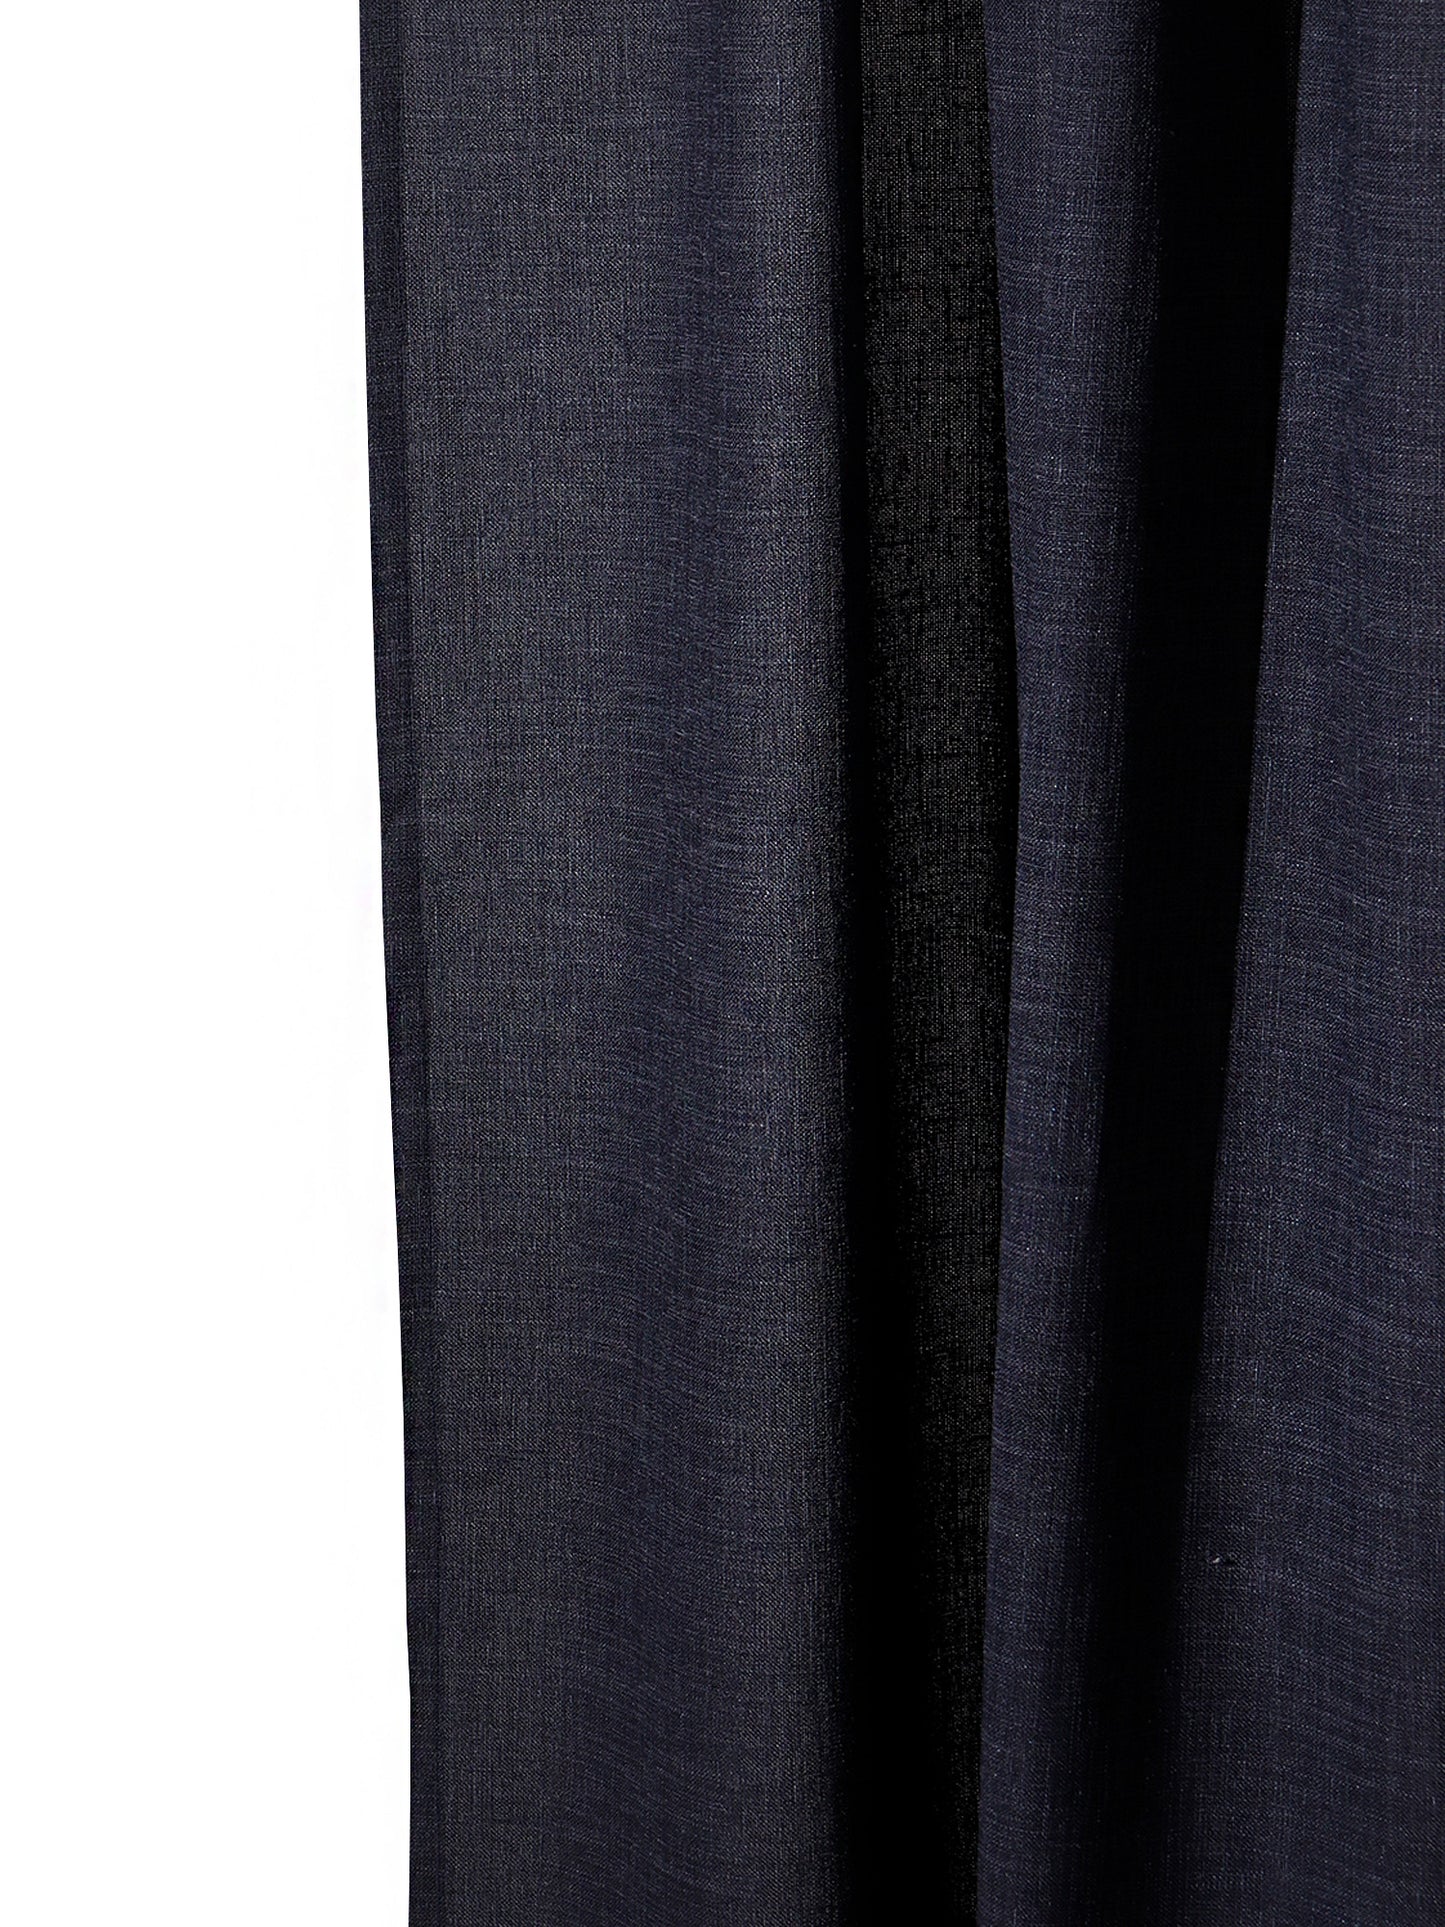 Door Curtain Polyester Blend Embroidered  Dark Blue - 50" X 84"